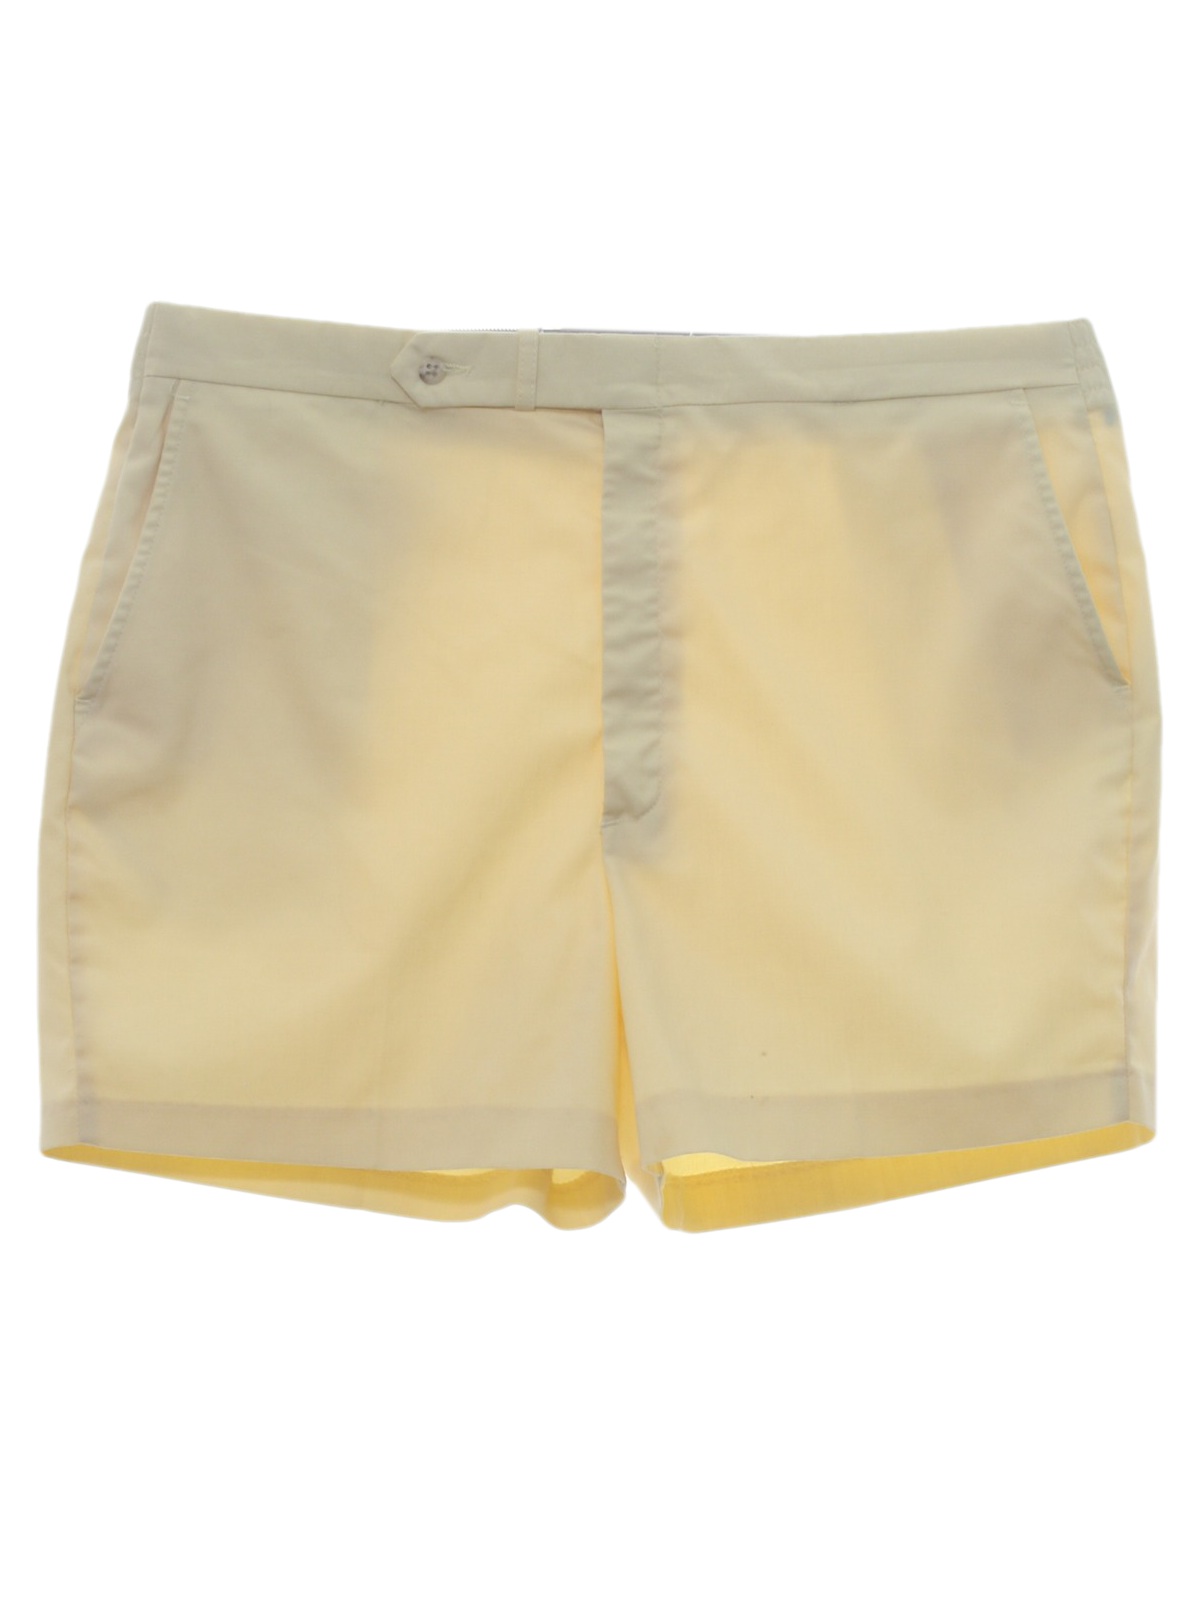 Farah 1980s Vintage Shorts: 80s -Farah- Mens dull yellow background ...